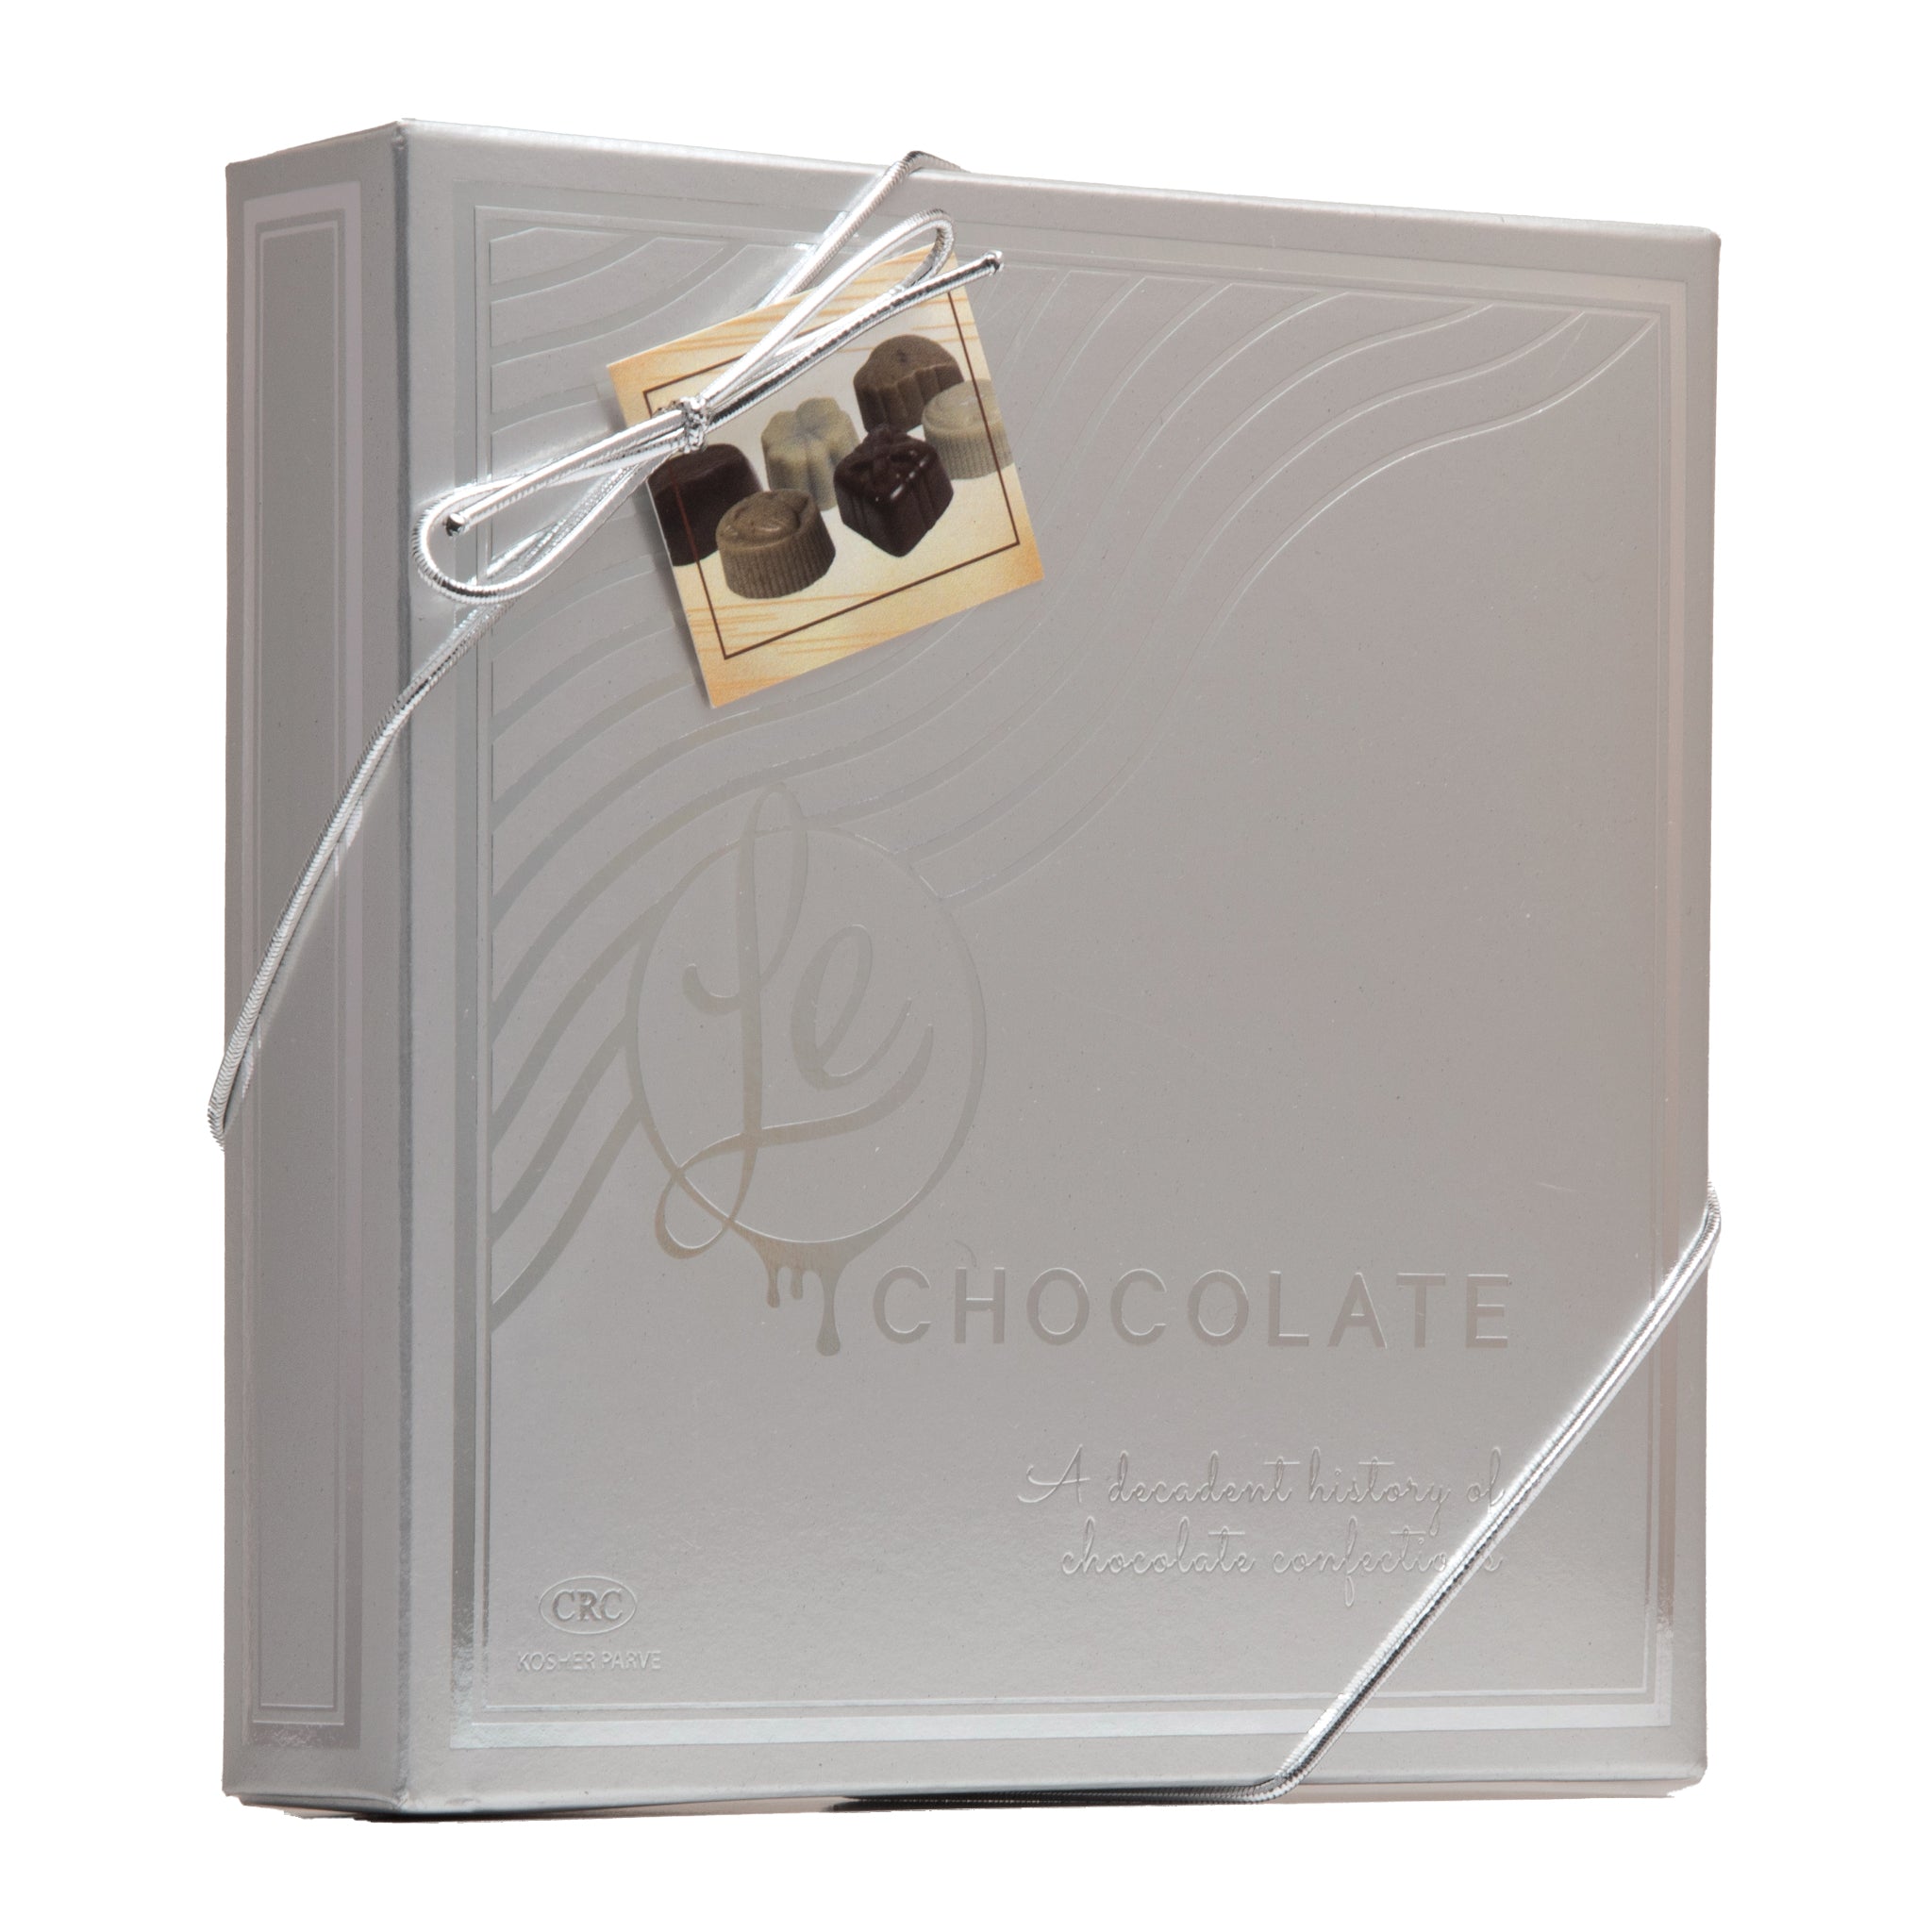 Lechocolate Medium gift Box